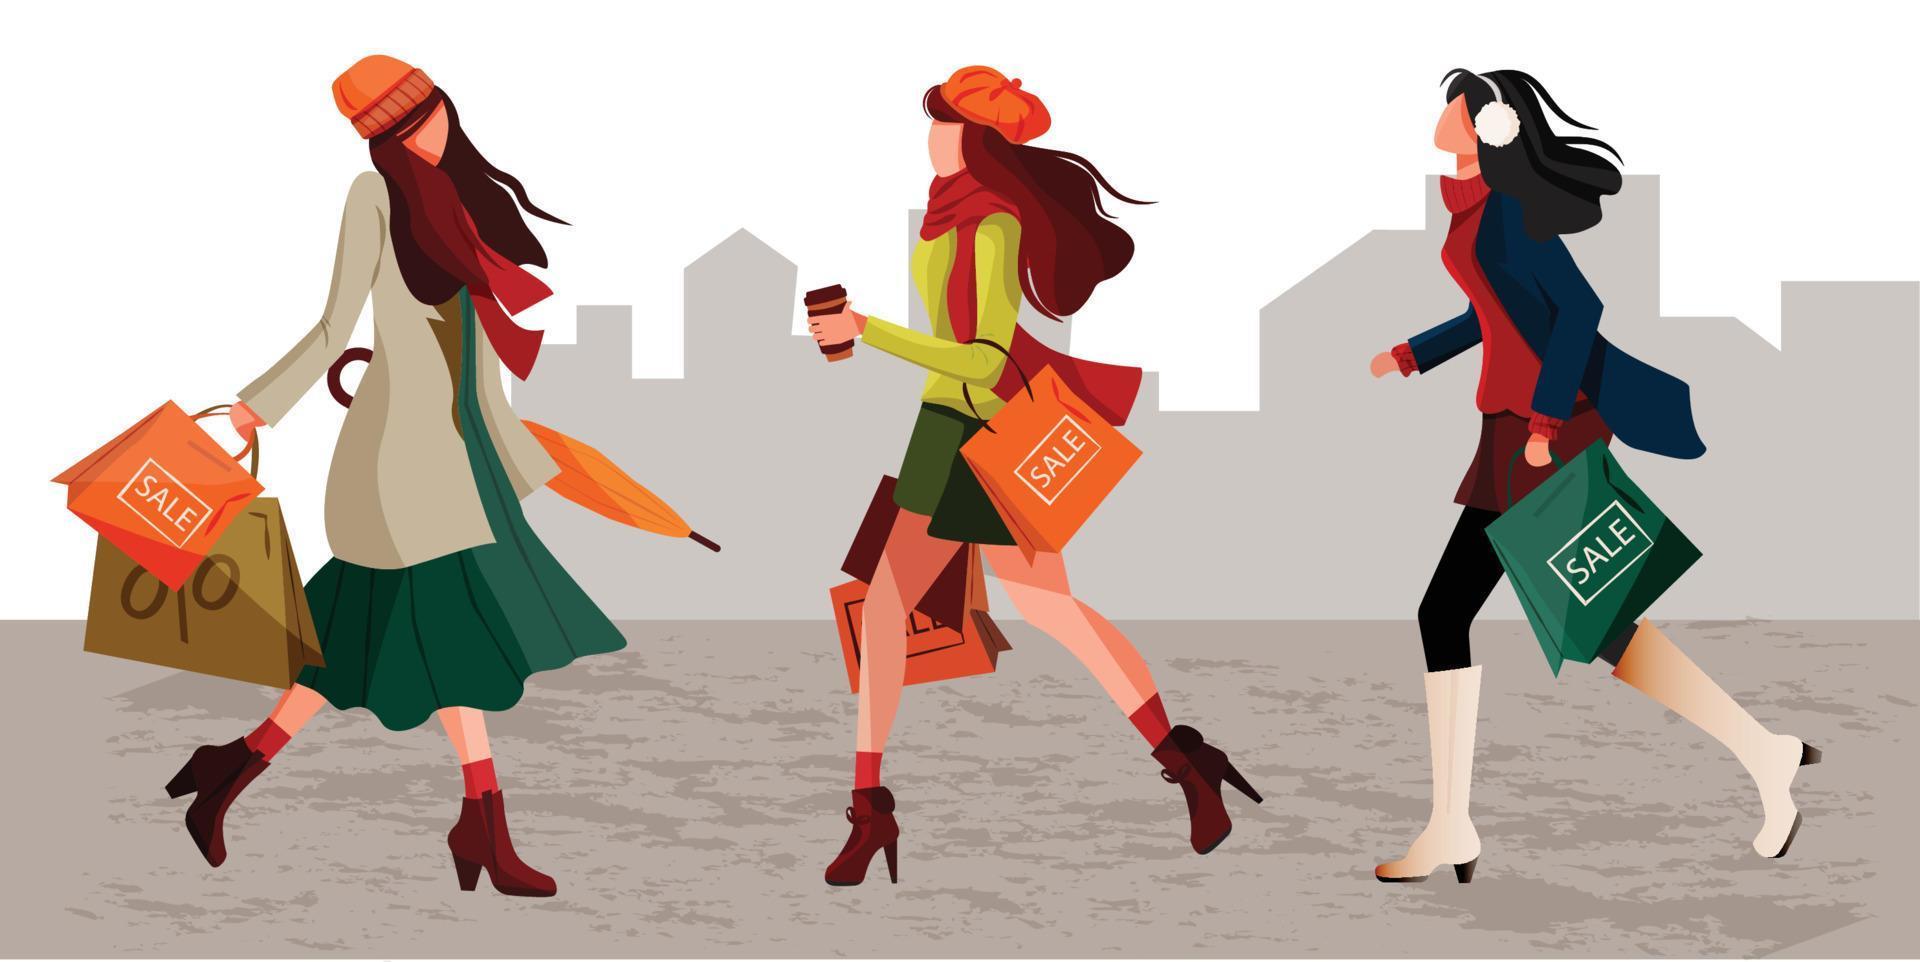 conjunto de caracteres elegantes mulheres andando segurando sacola de compras em roupas quentes de outono. conceito de meninas bonitas e elegantes desfrutando de descontos. ótimo para pôster, banner, panfleto para venda de outono. vetor